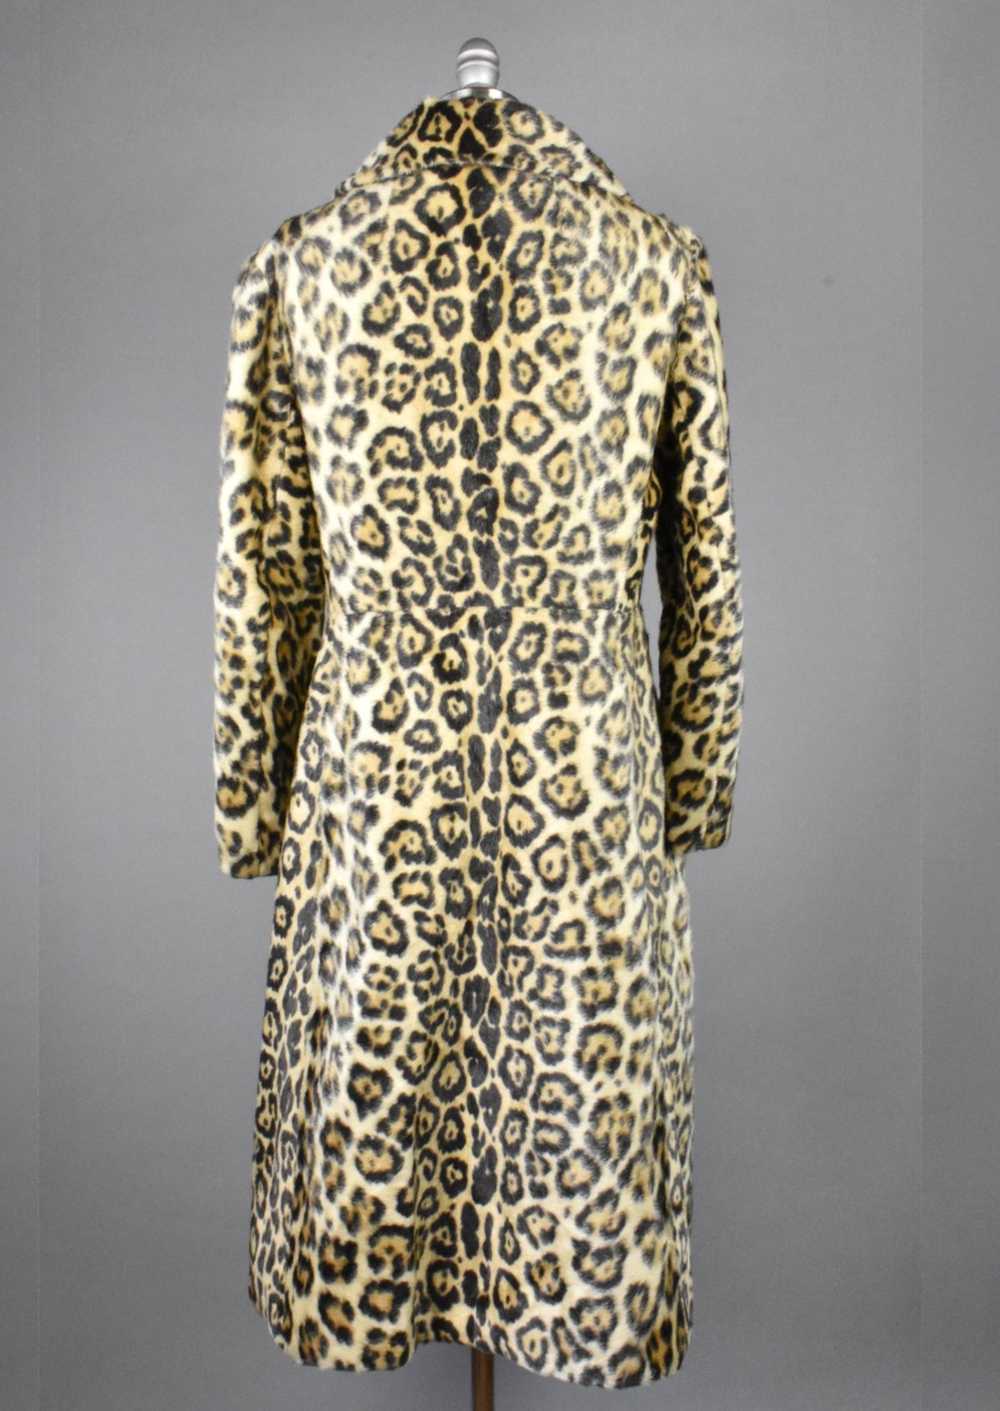 Leopard Print Faux Fur Coat by Safari - image 3